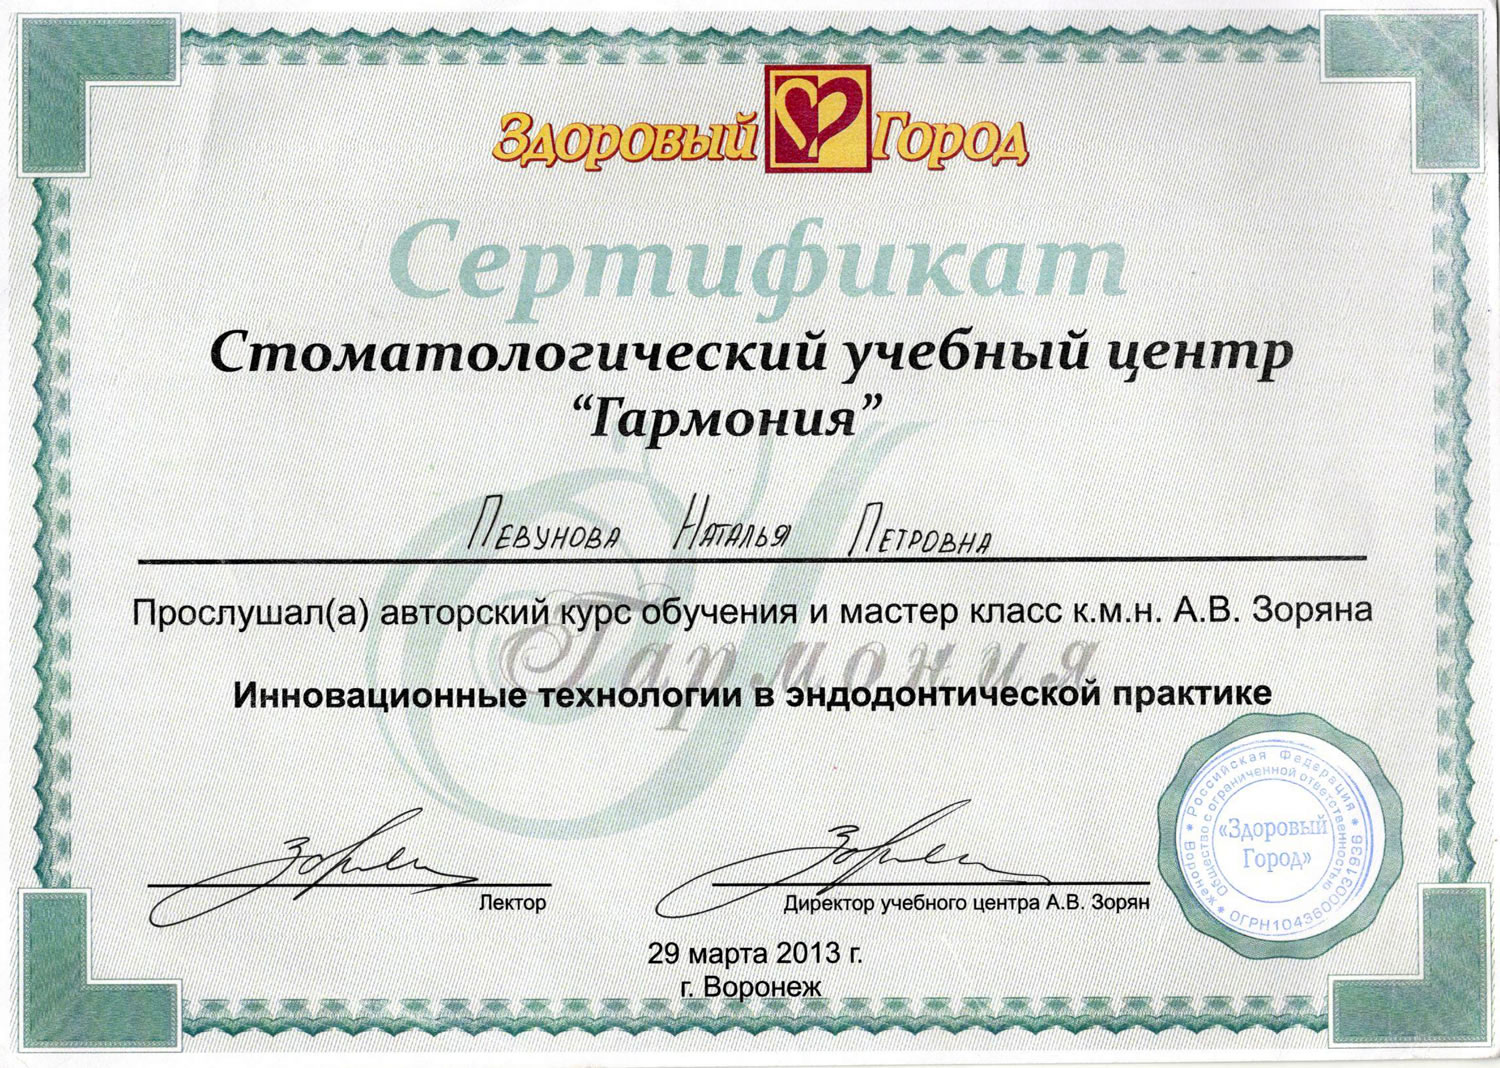 Сертификат Гущина Н.П.